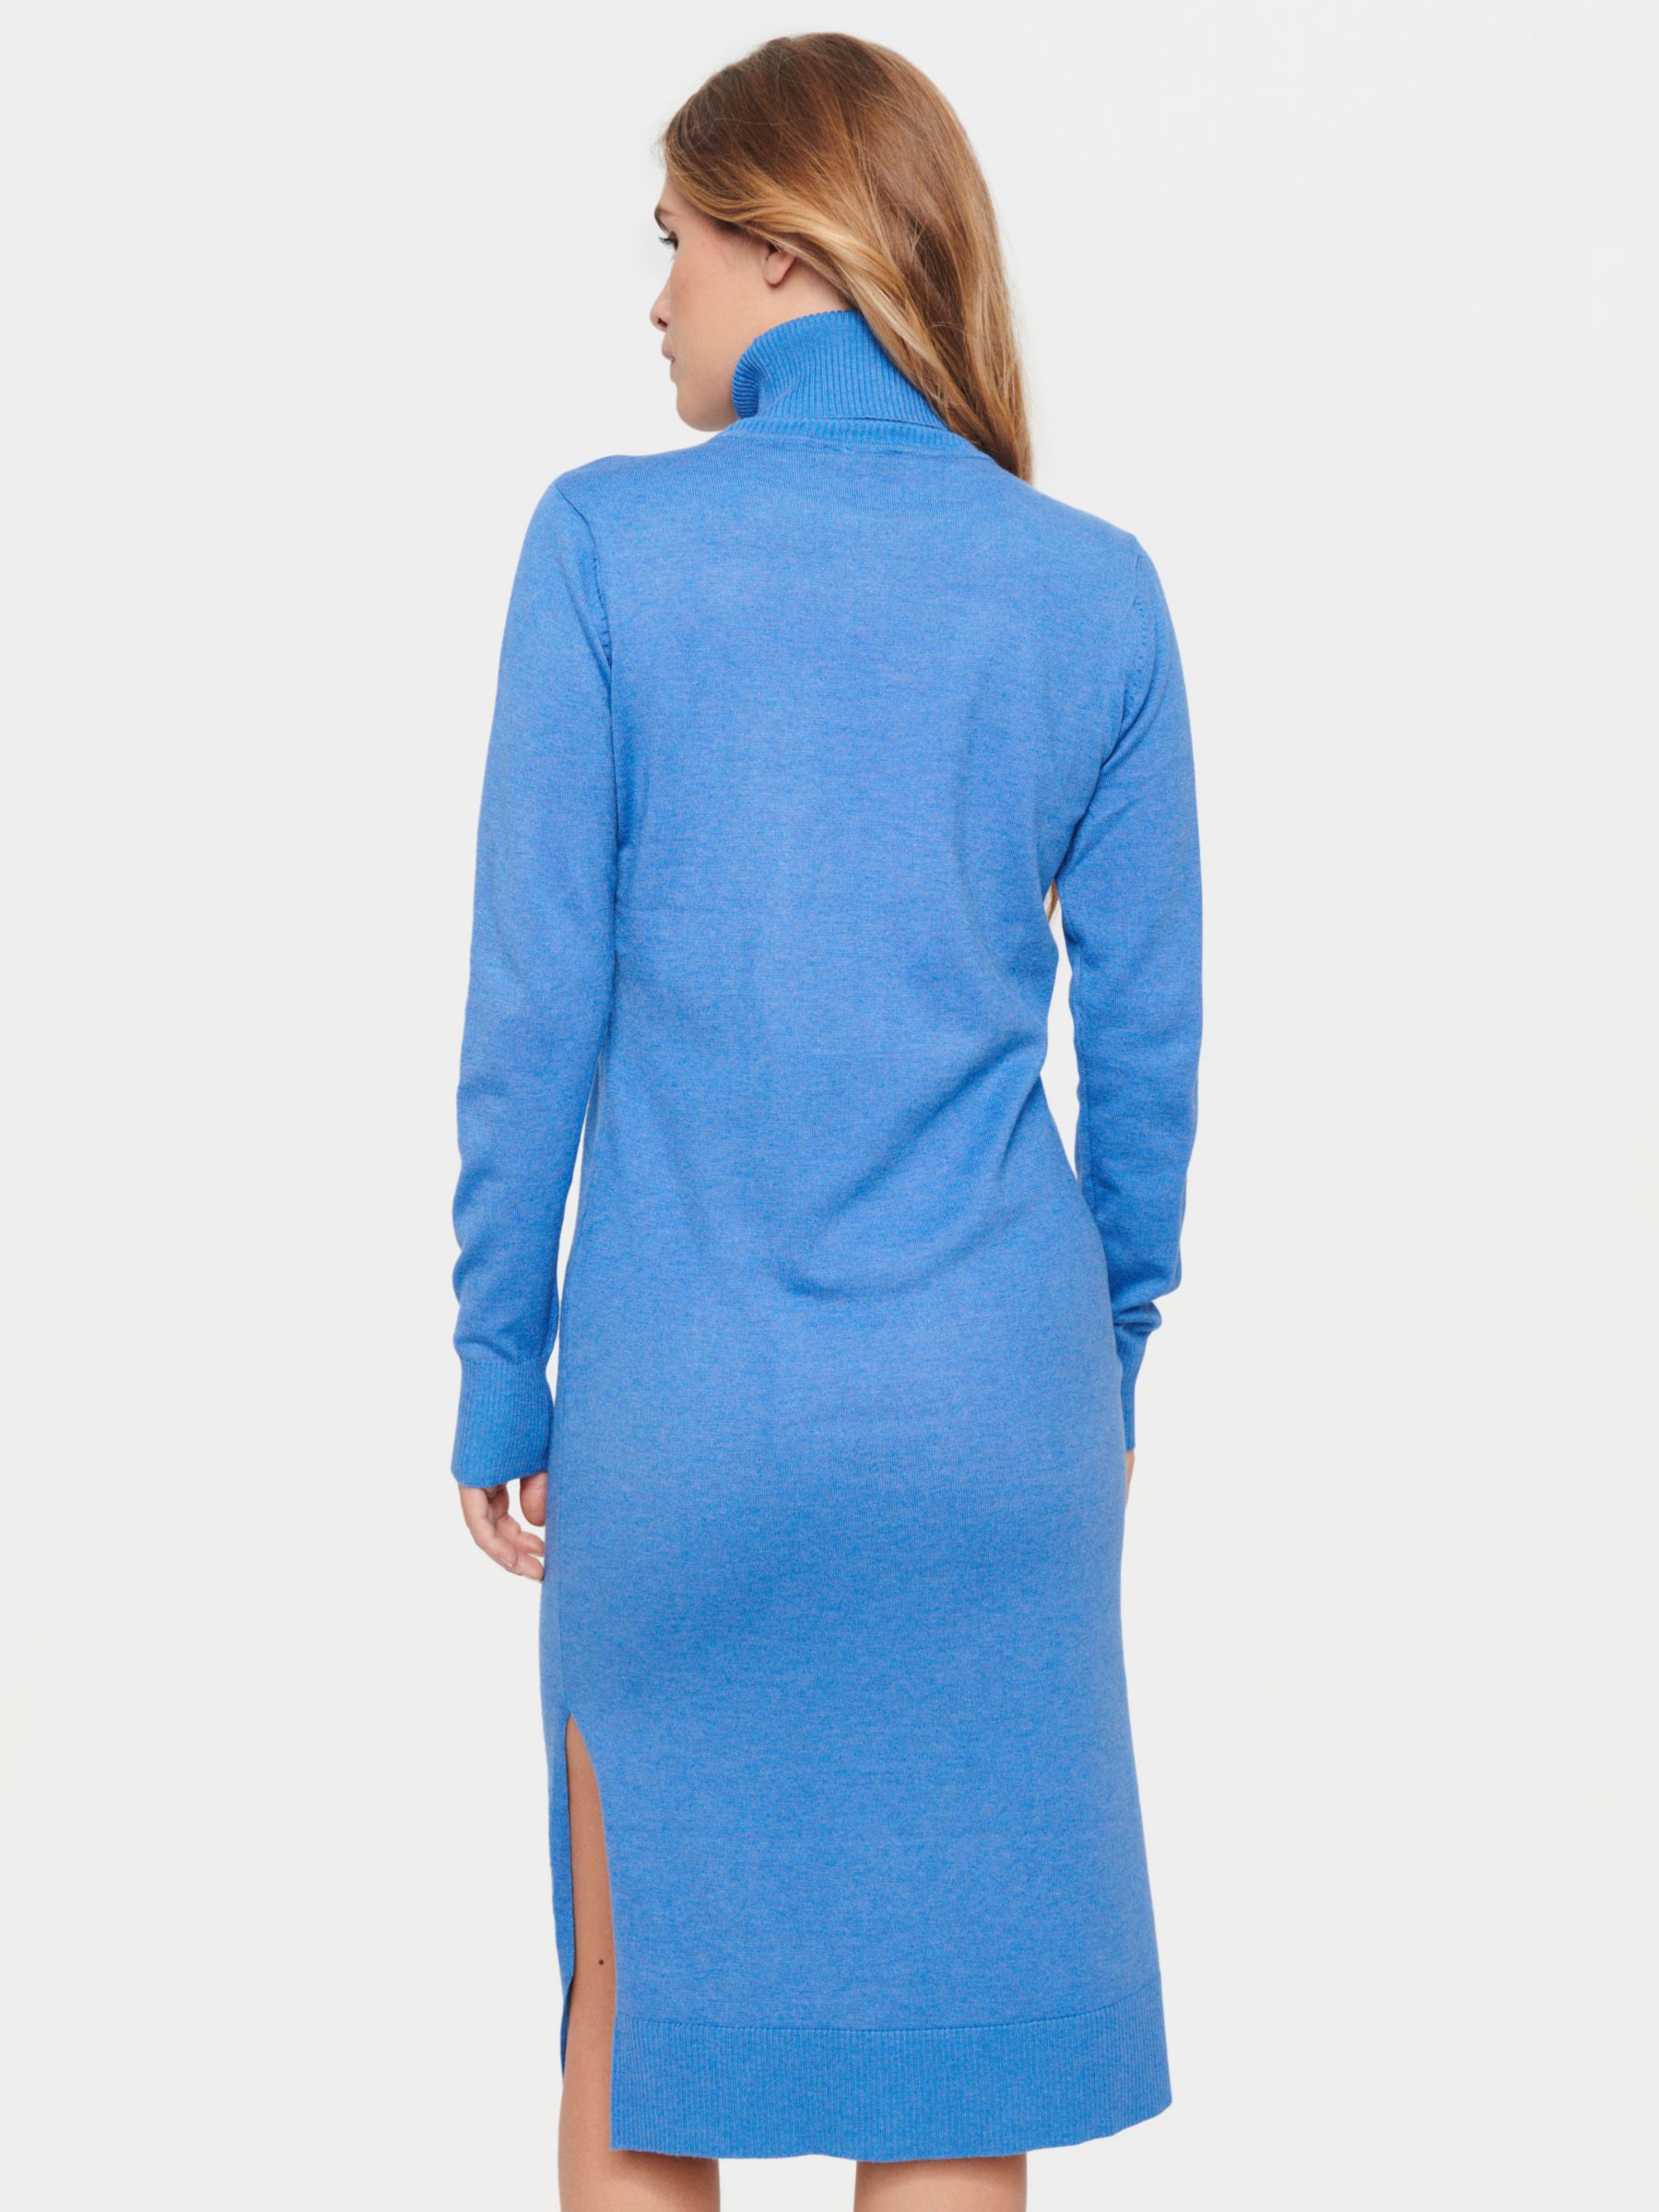 Saint Tropez Mila Roll Neck Knitted Midi Dress, Dutch Blue Melange, L